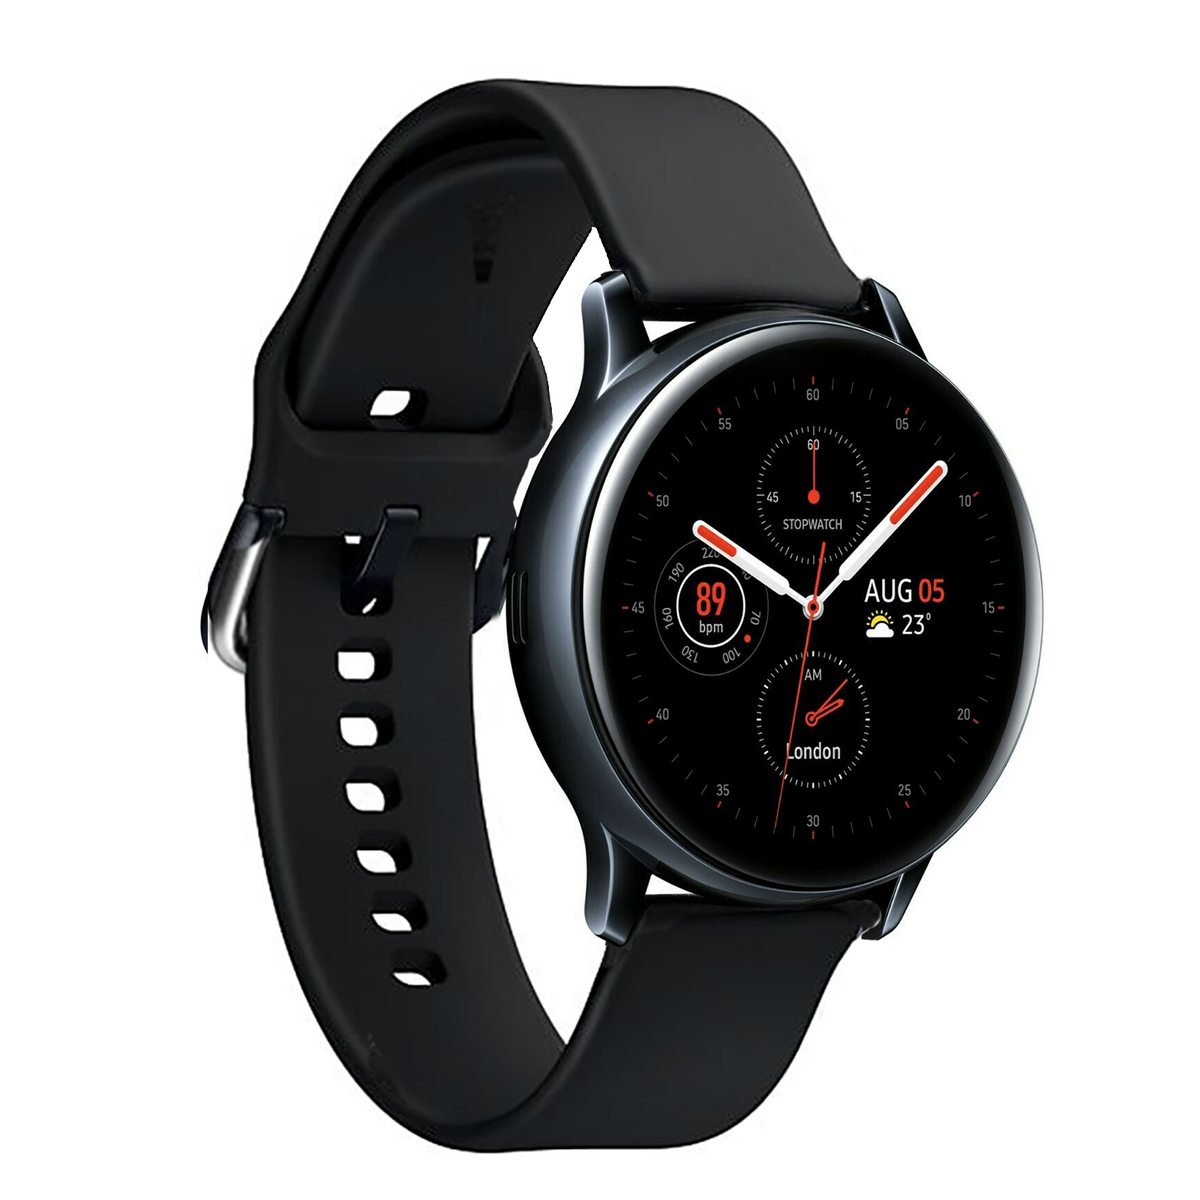 Samsung Galaxy Watch Active 2 – Cellular Savings